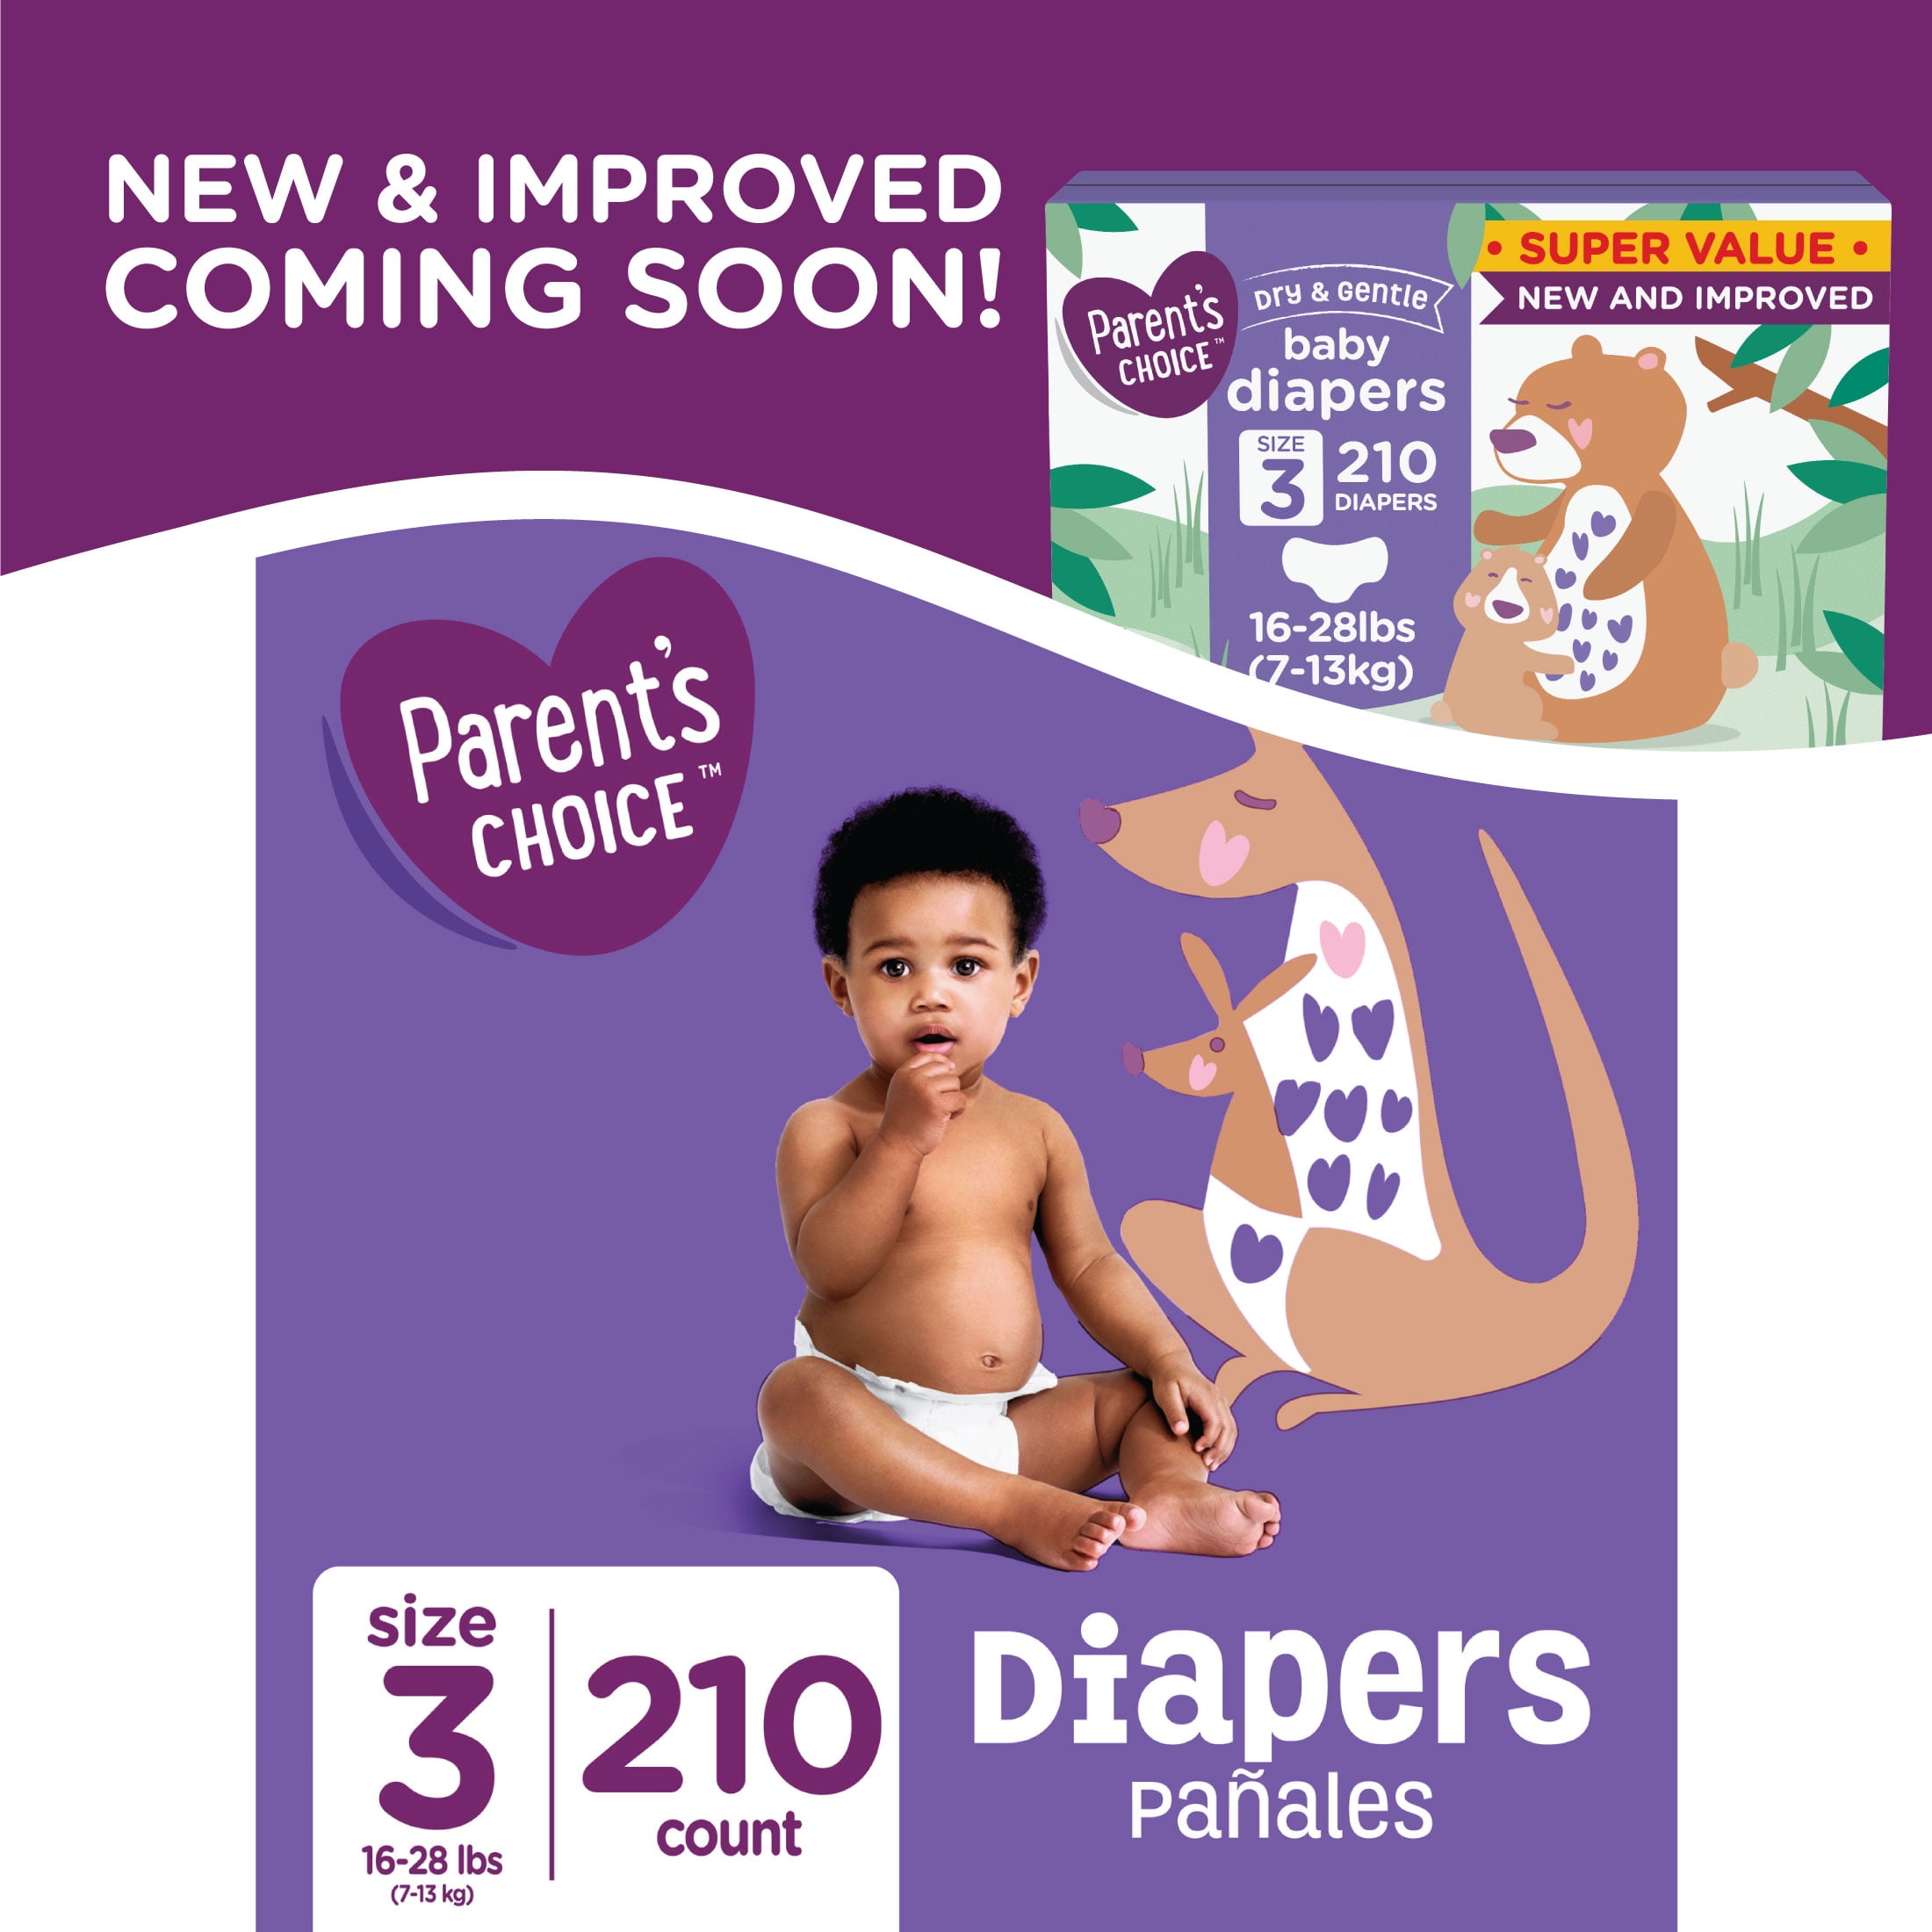 walmart brand diapers size 1